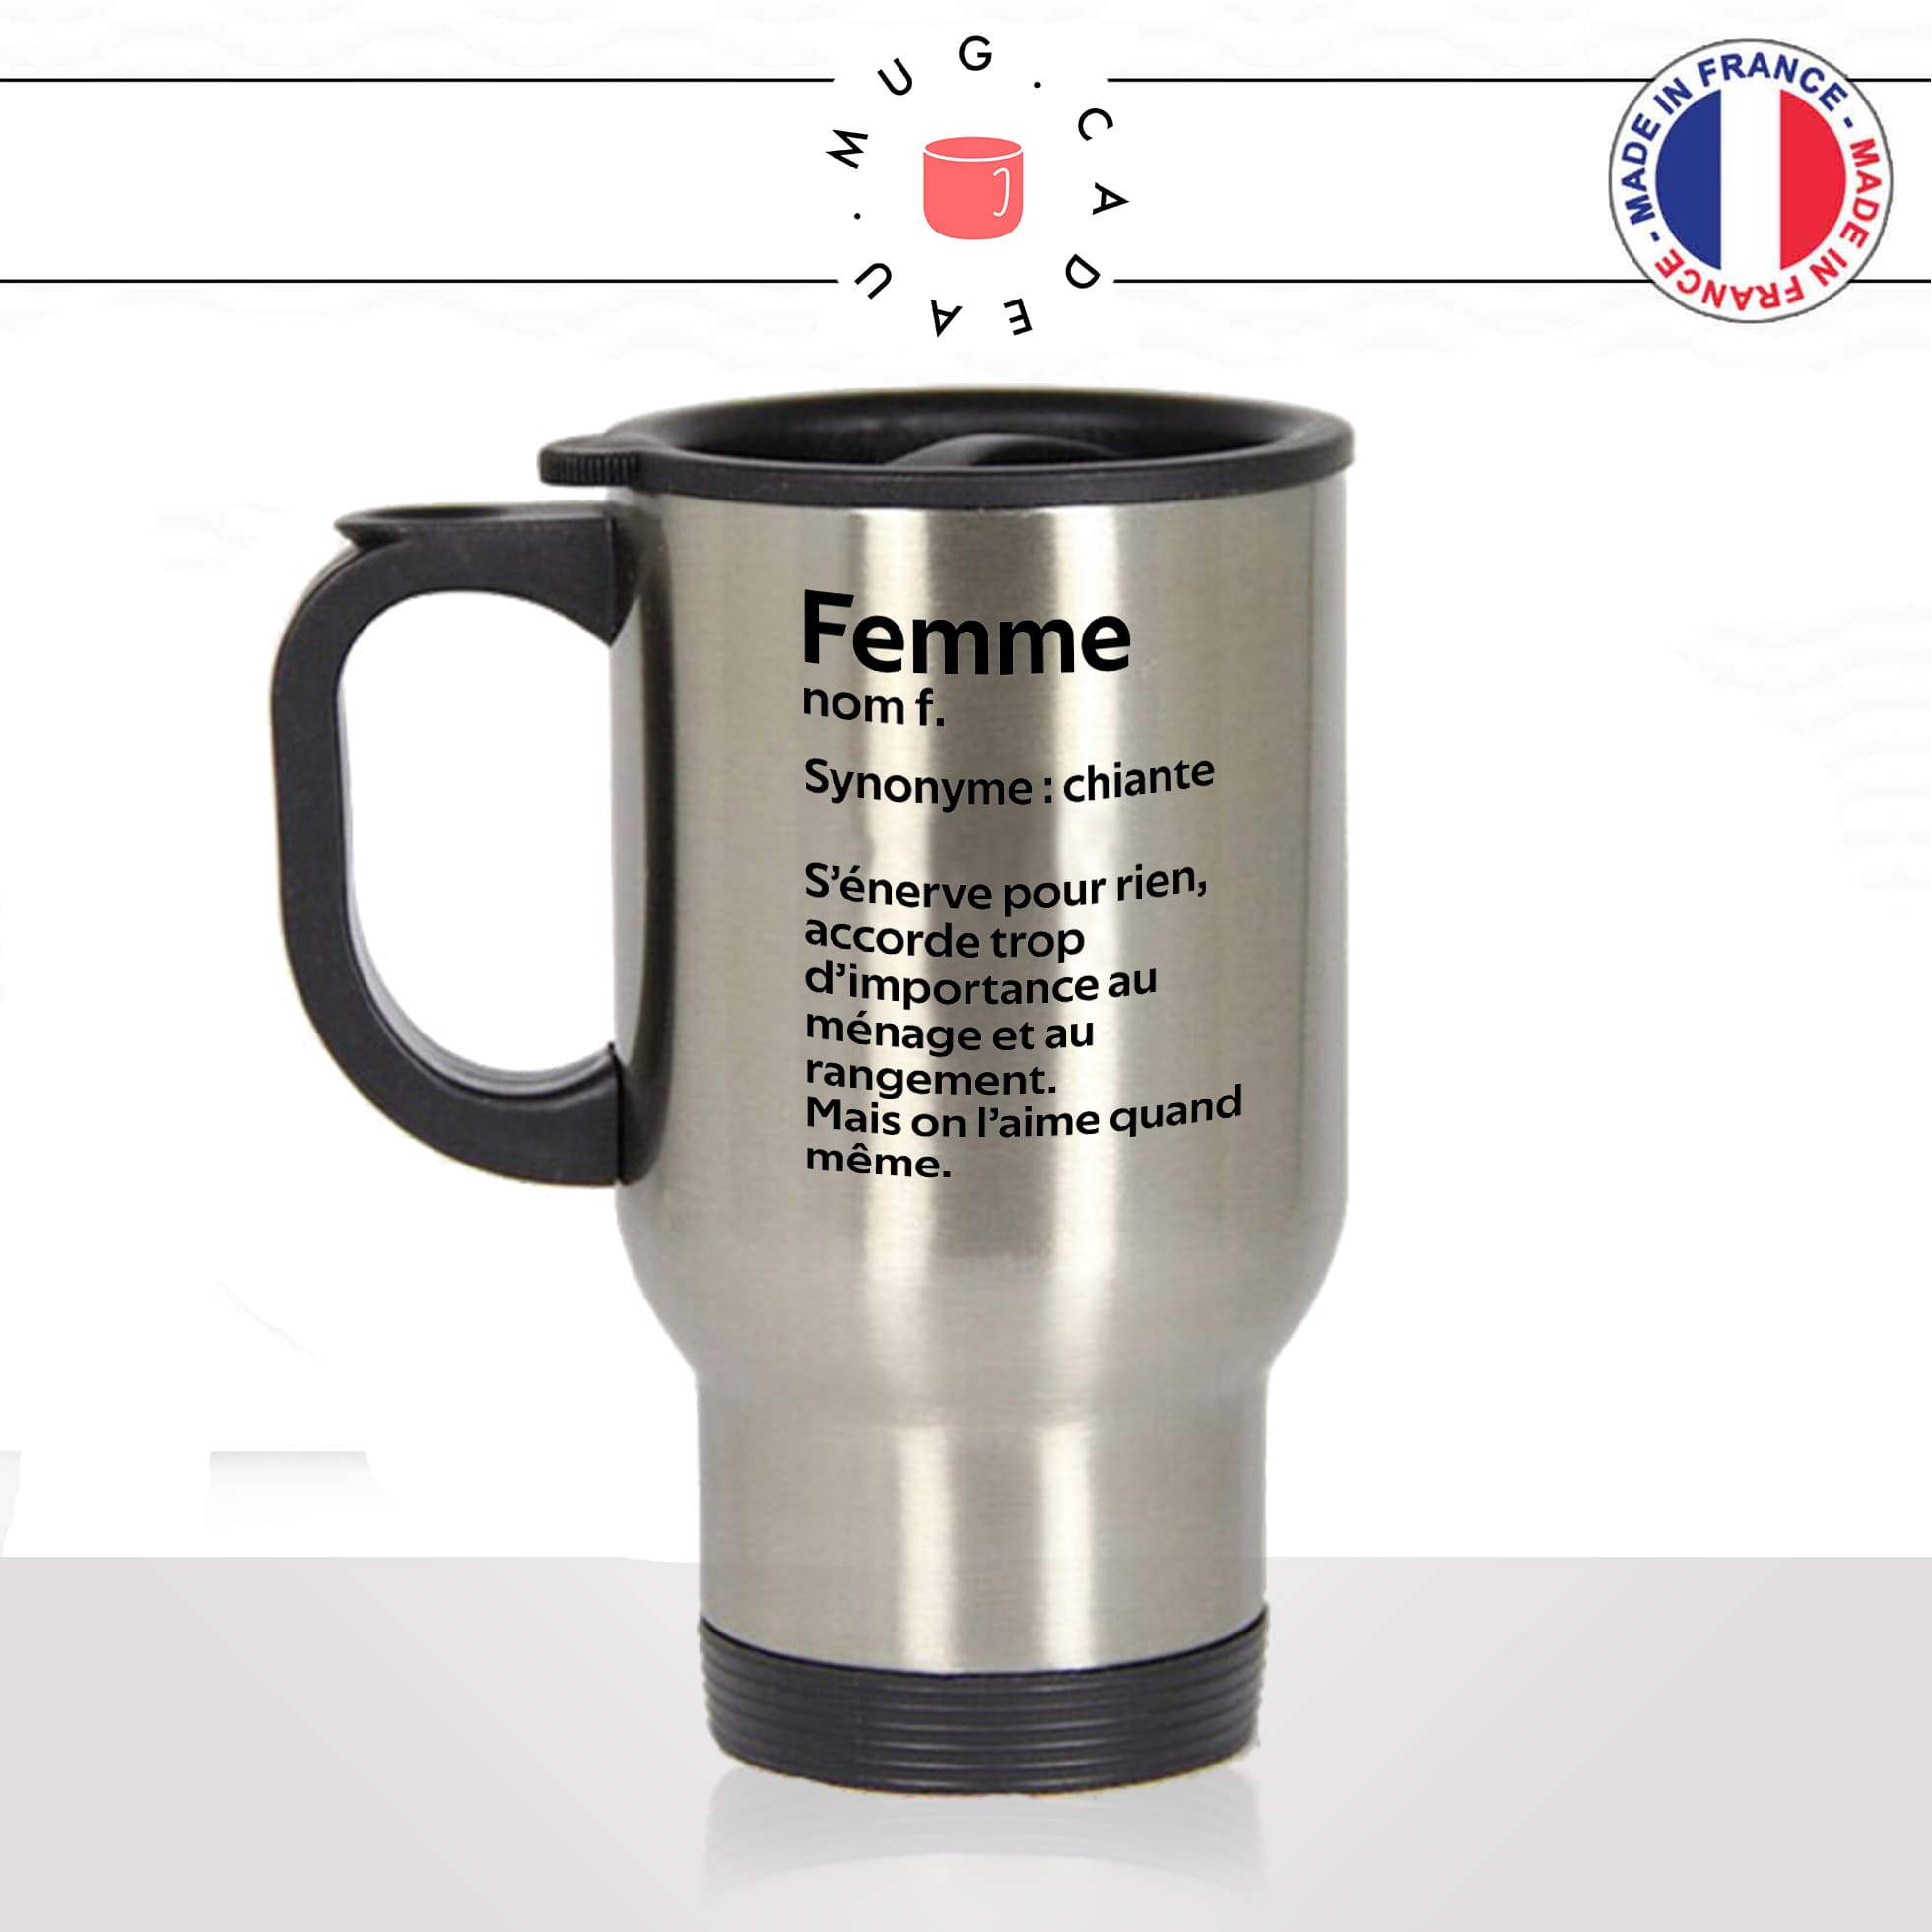 mug-tasse-thermos-isotherme-voyage-femme-définition-synonyme-chiante-ménage-on-laime-homme-couple-maman-humour-fun-idée-cadeau